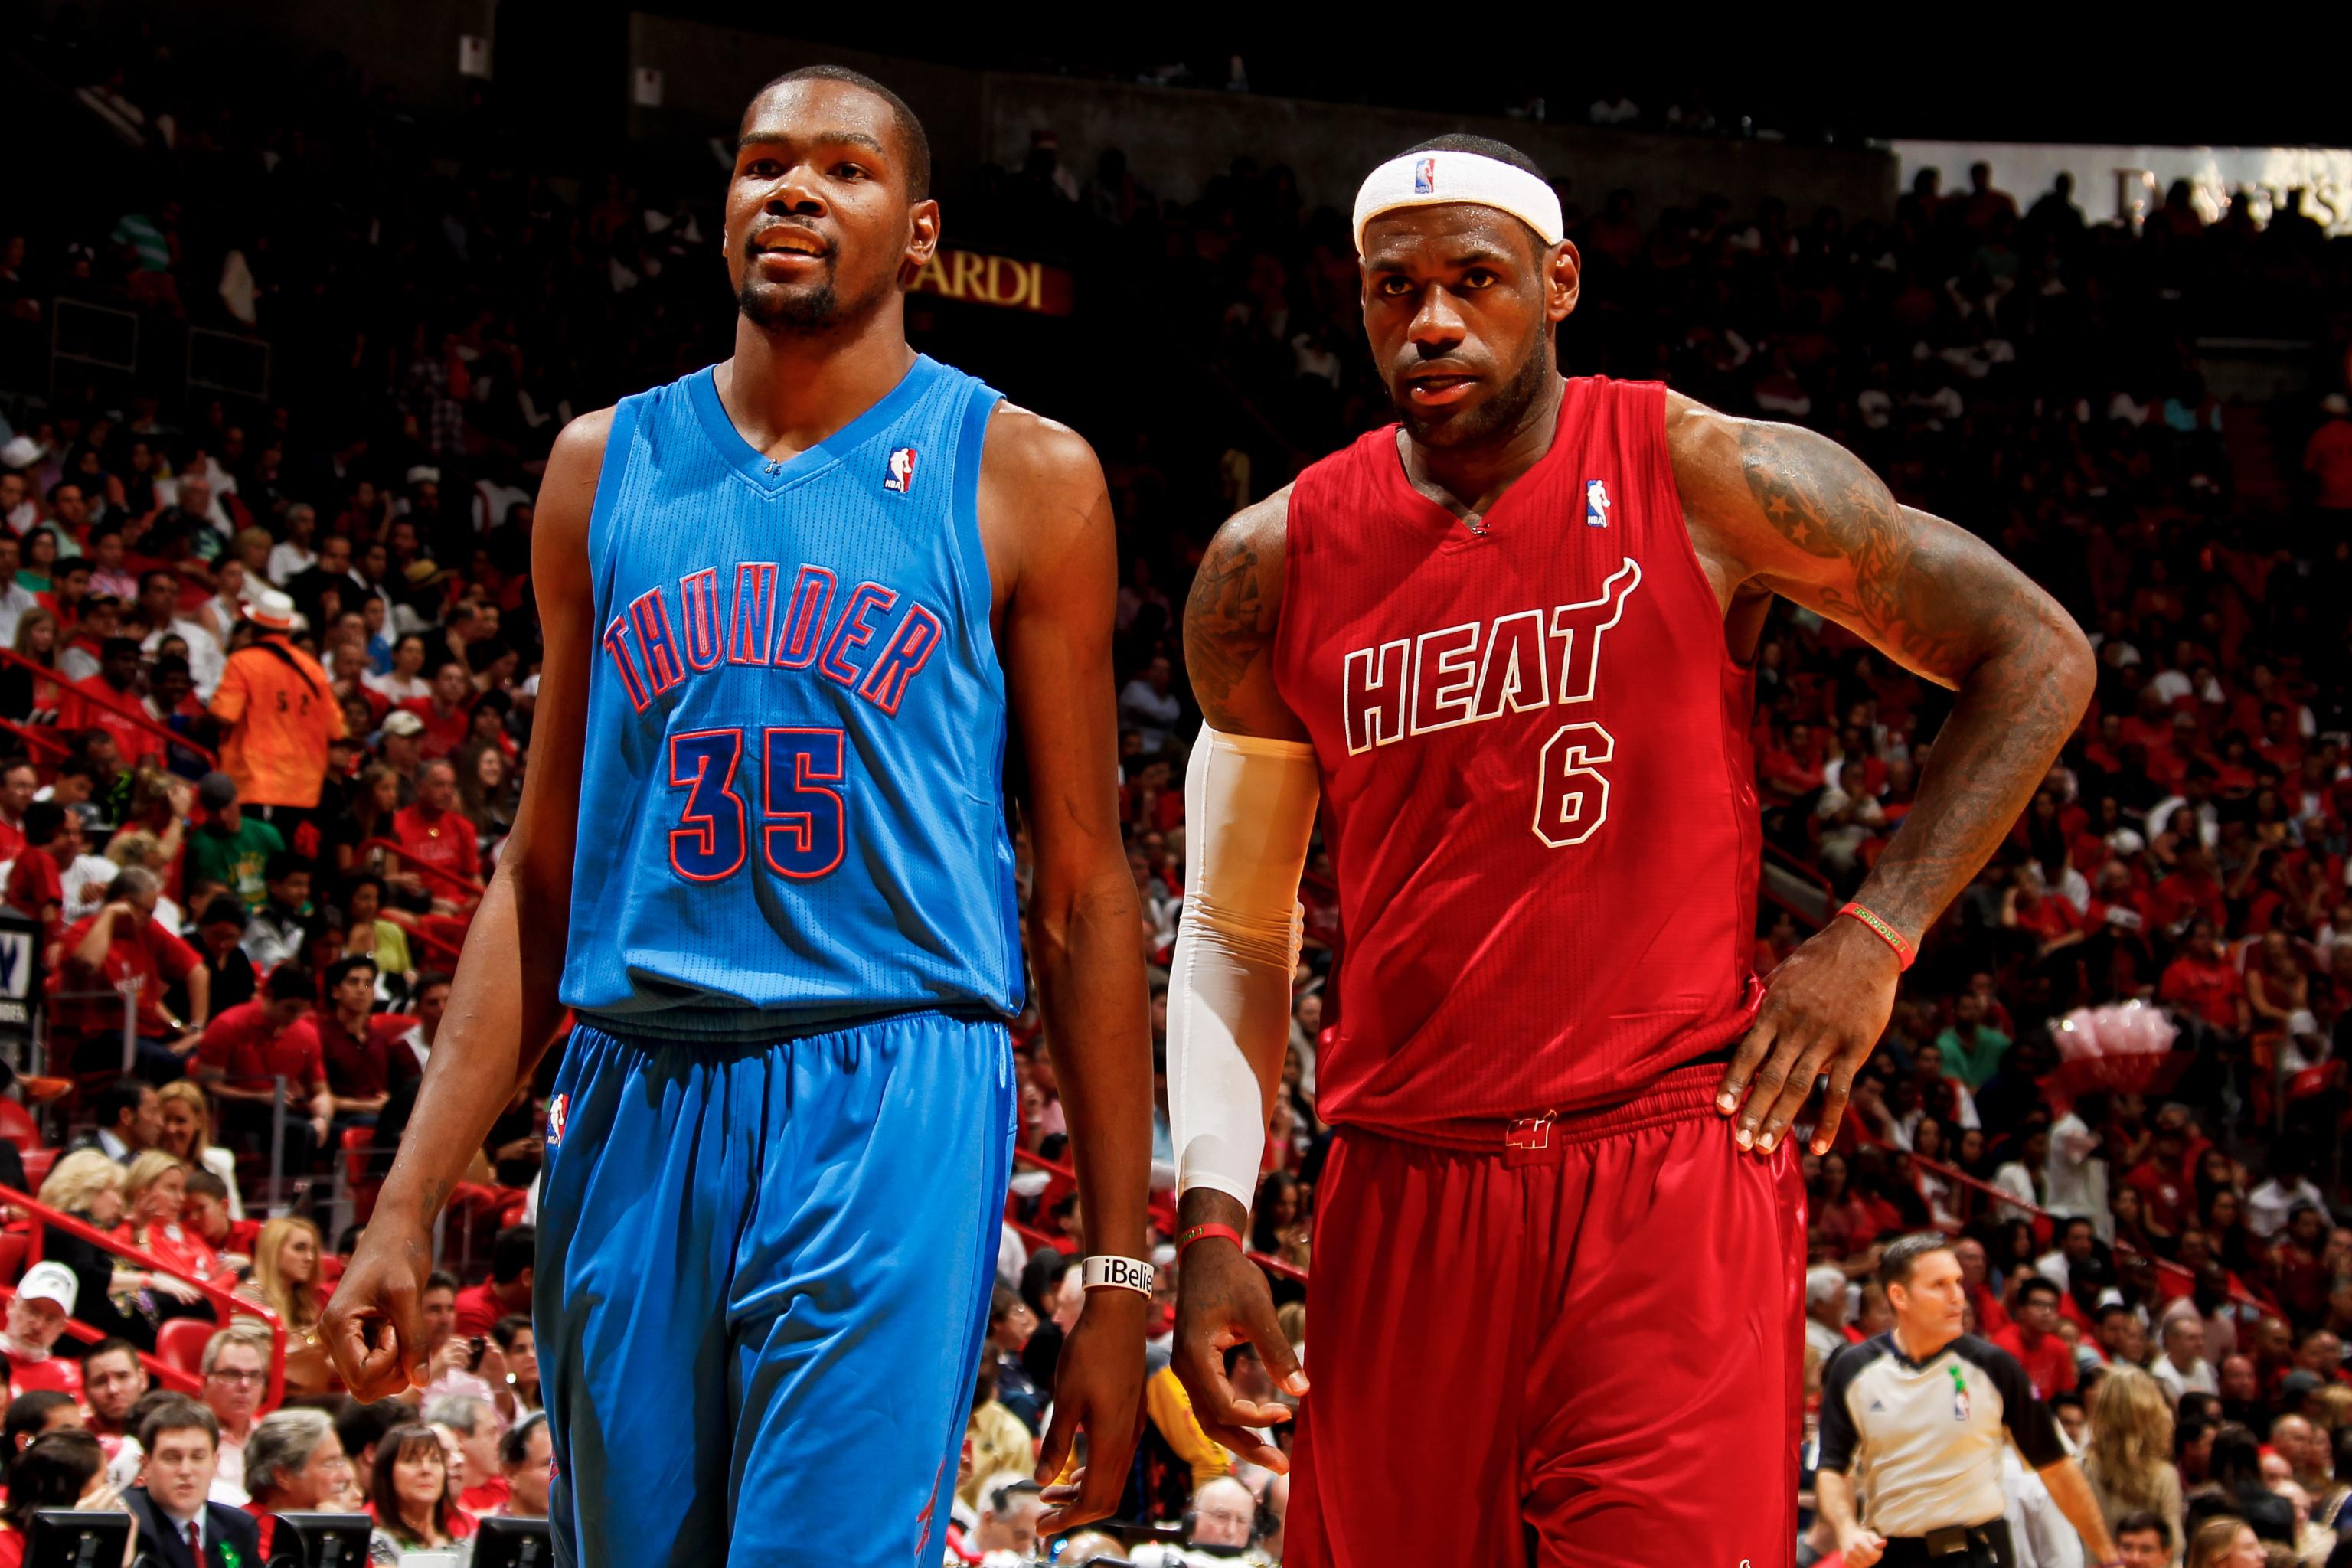 Kevin Durant puts on MVP show vs. LeBron James, Heat